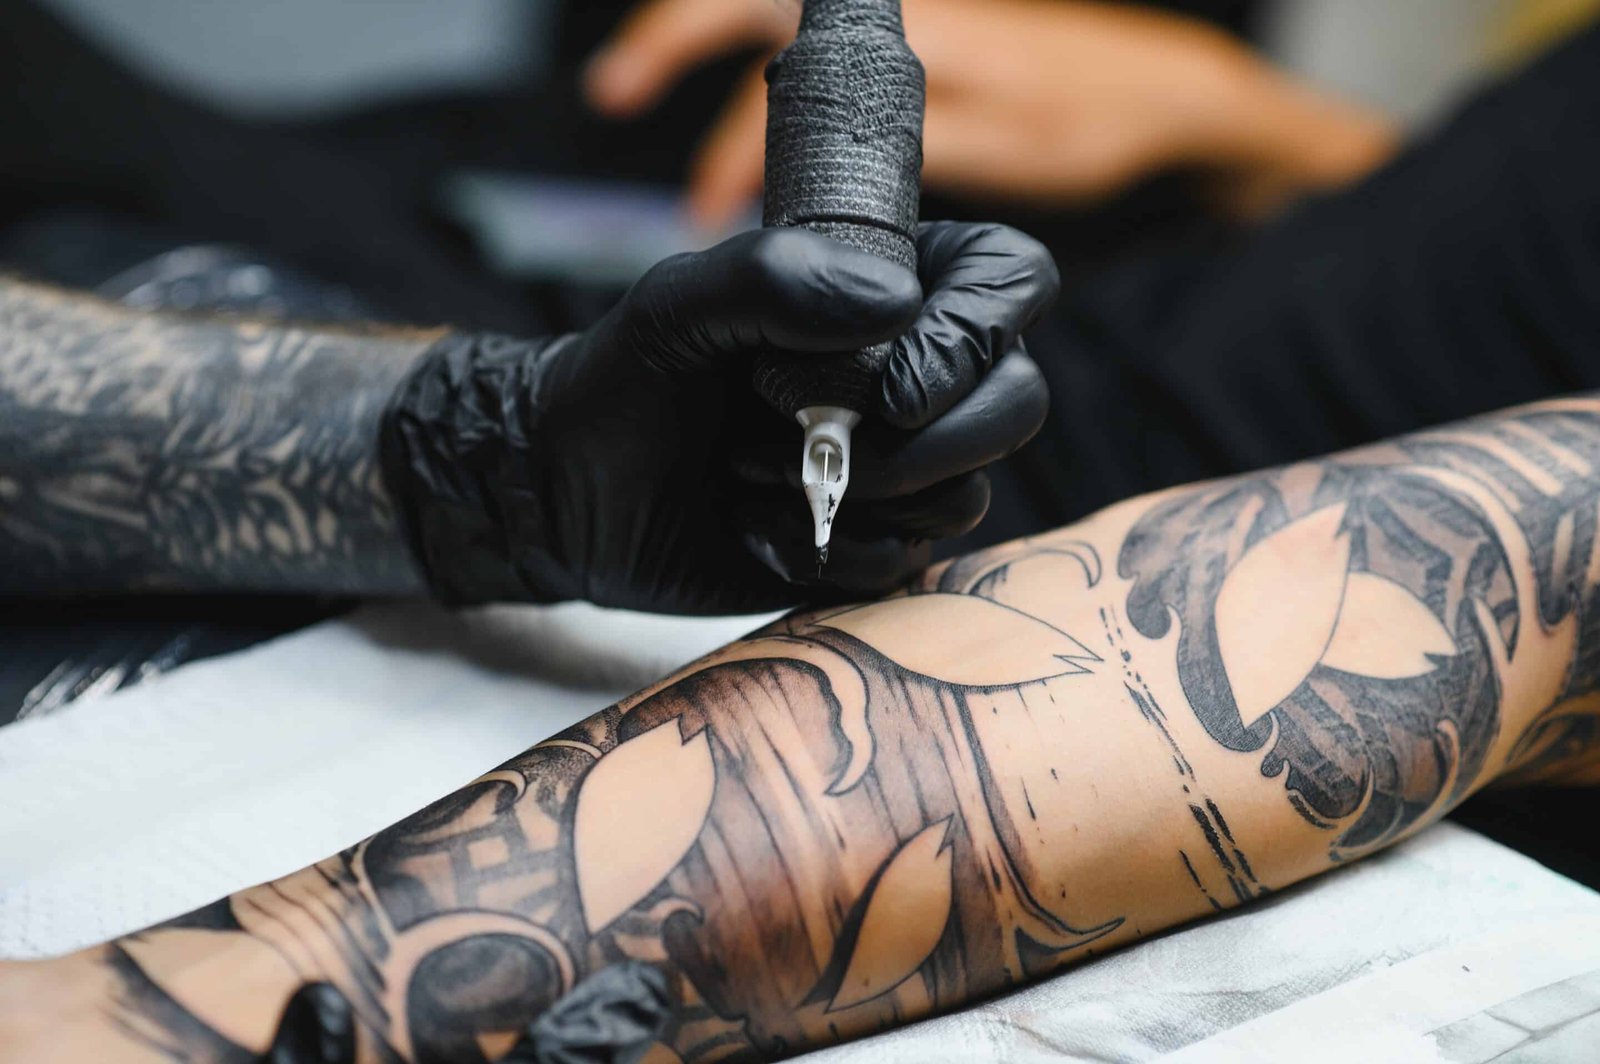 Mystic River Tattoo — LuckyFish, Inc. and Tattoo Santa Barbara